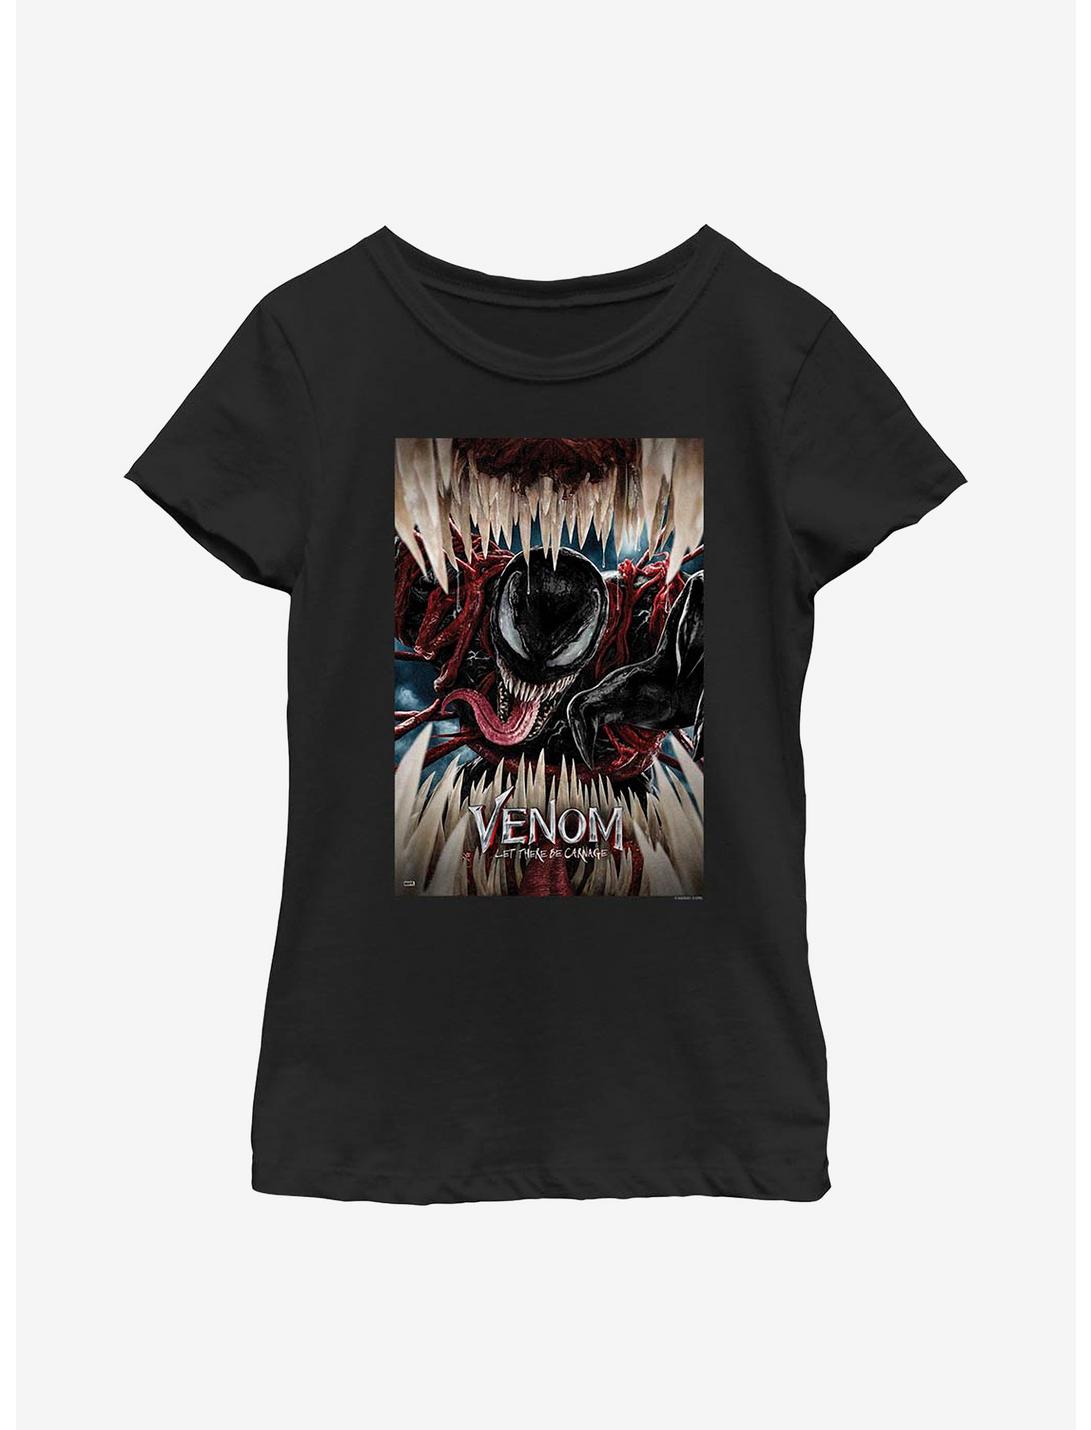 Marvel Venom: Let There Be Carnage Poster Youth Girls T-Shirt, BLACK, hi-res